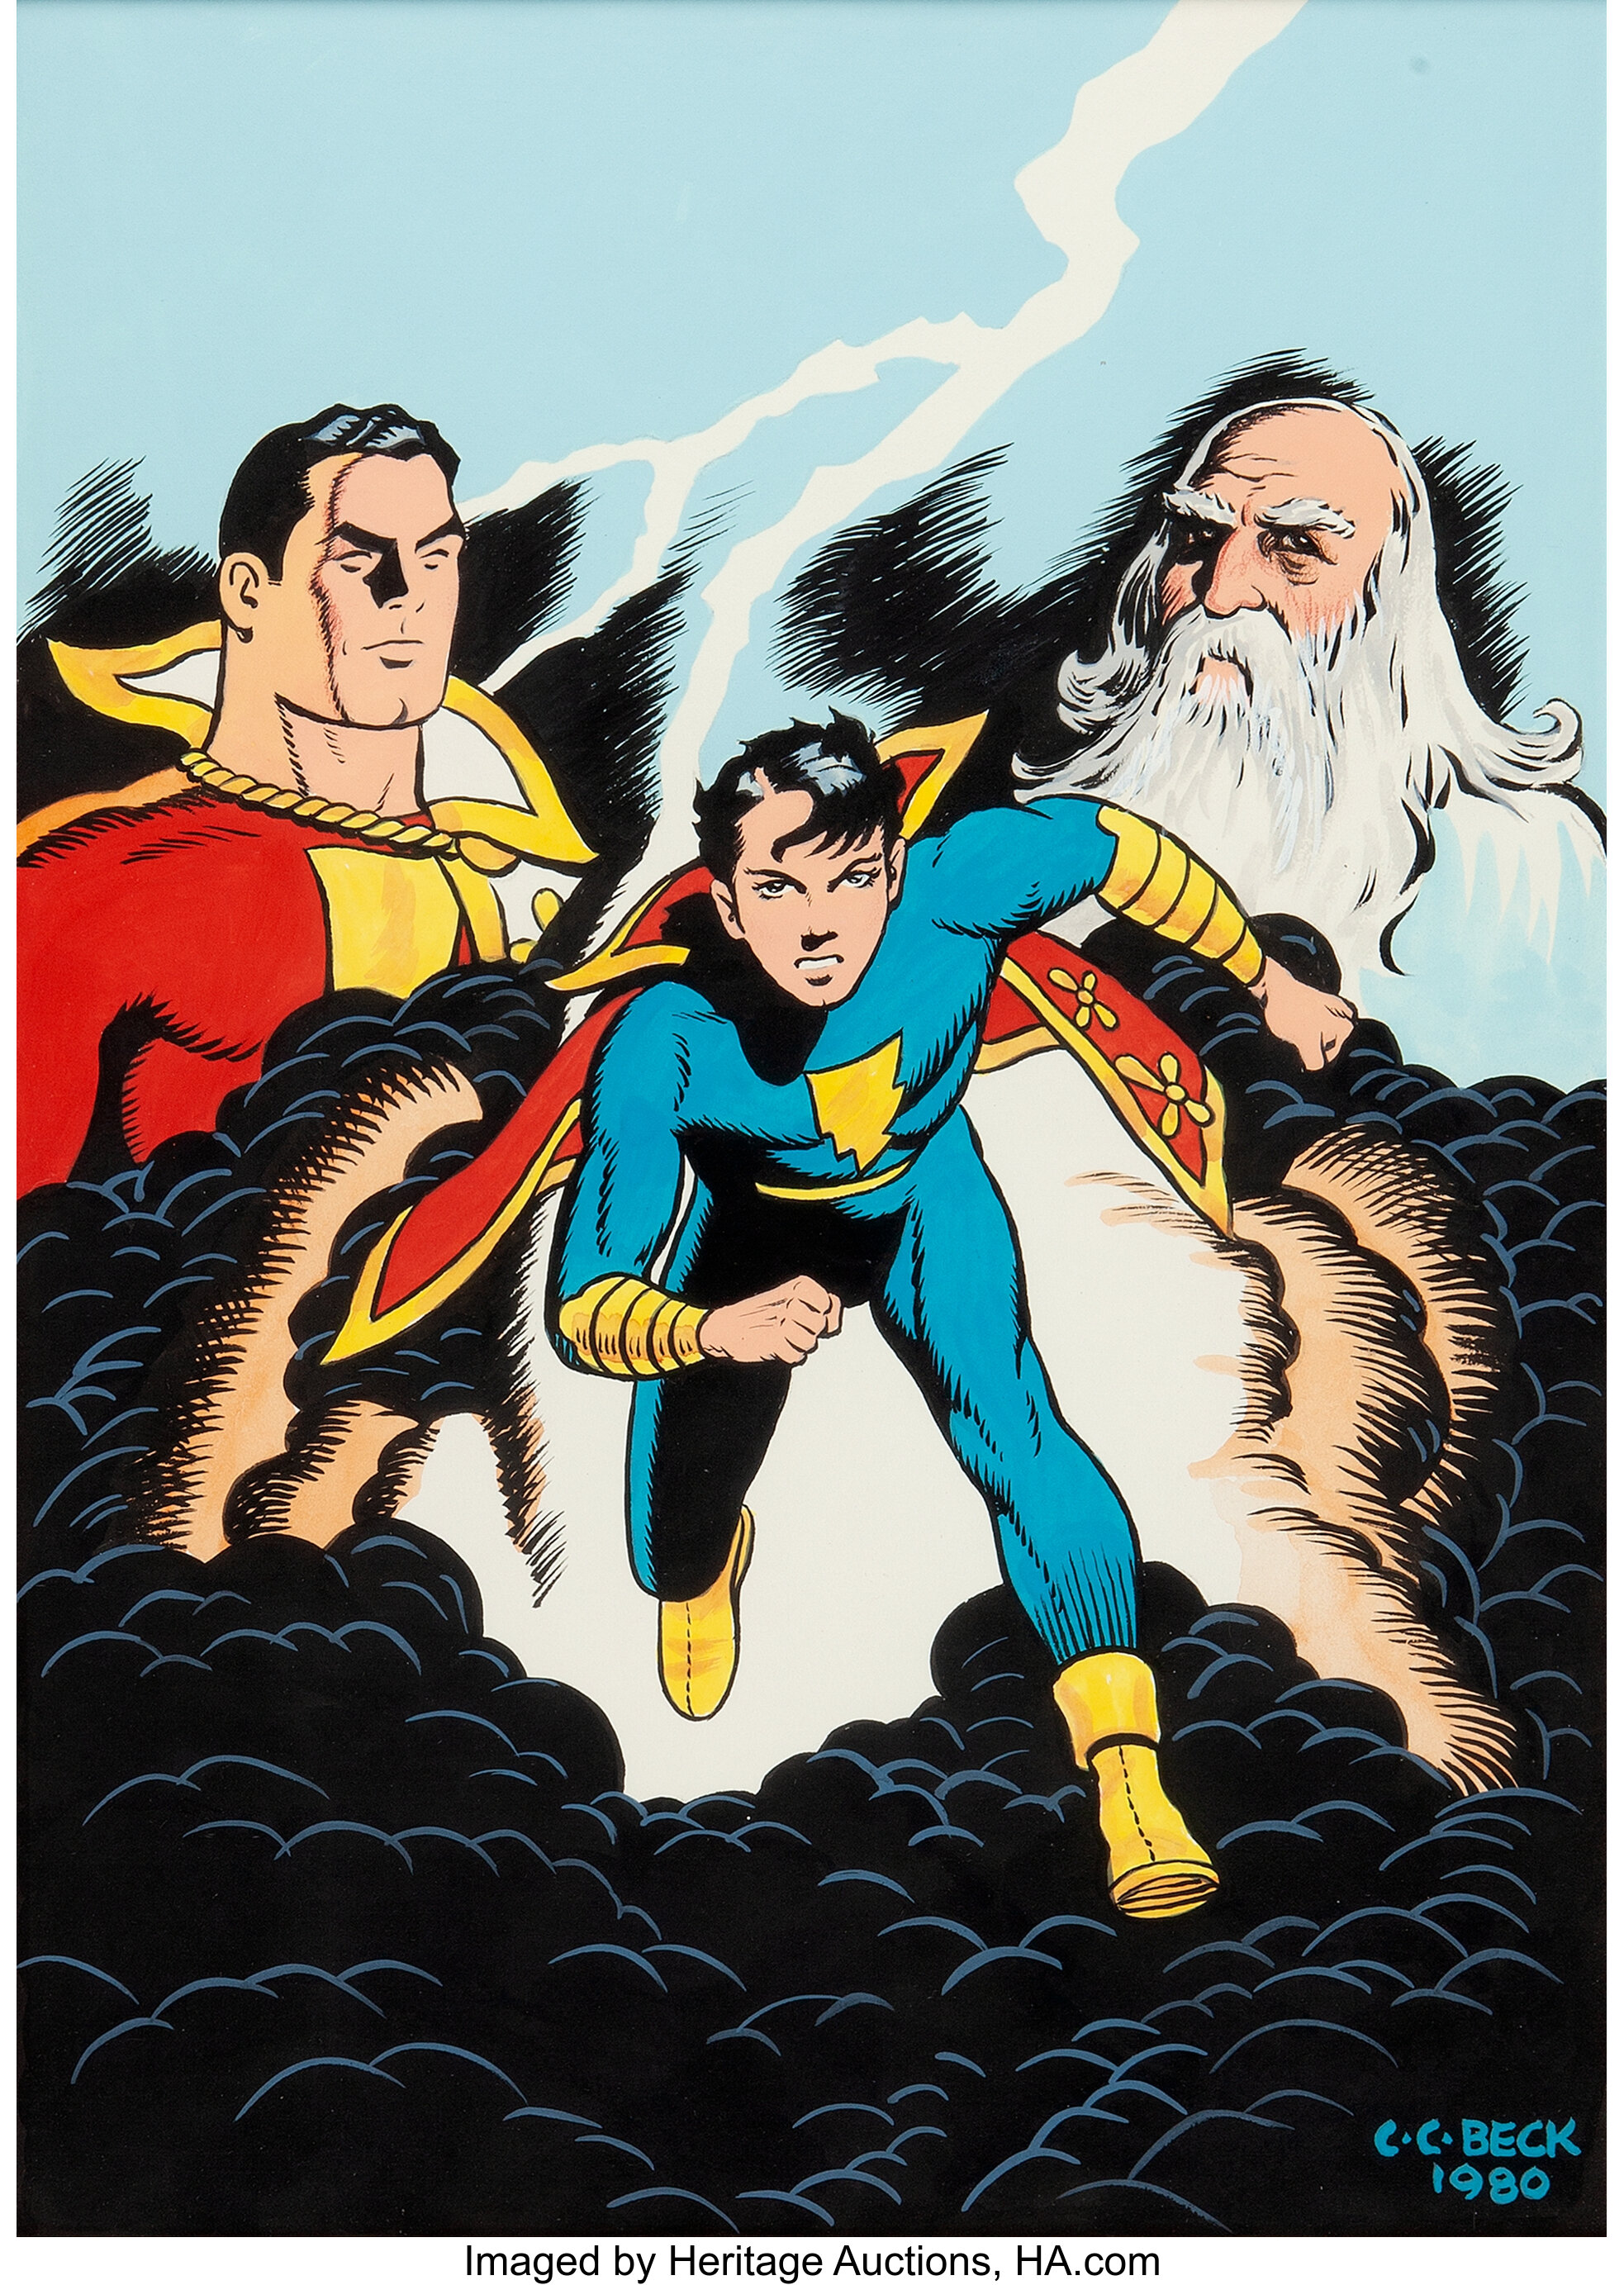 C. C. Beck - Captain Marvel, Captain Marvel Jr., and Shazam